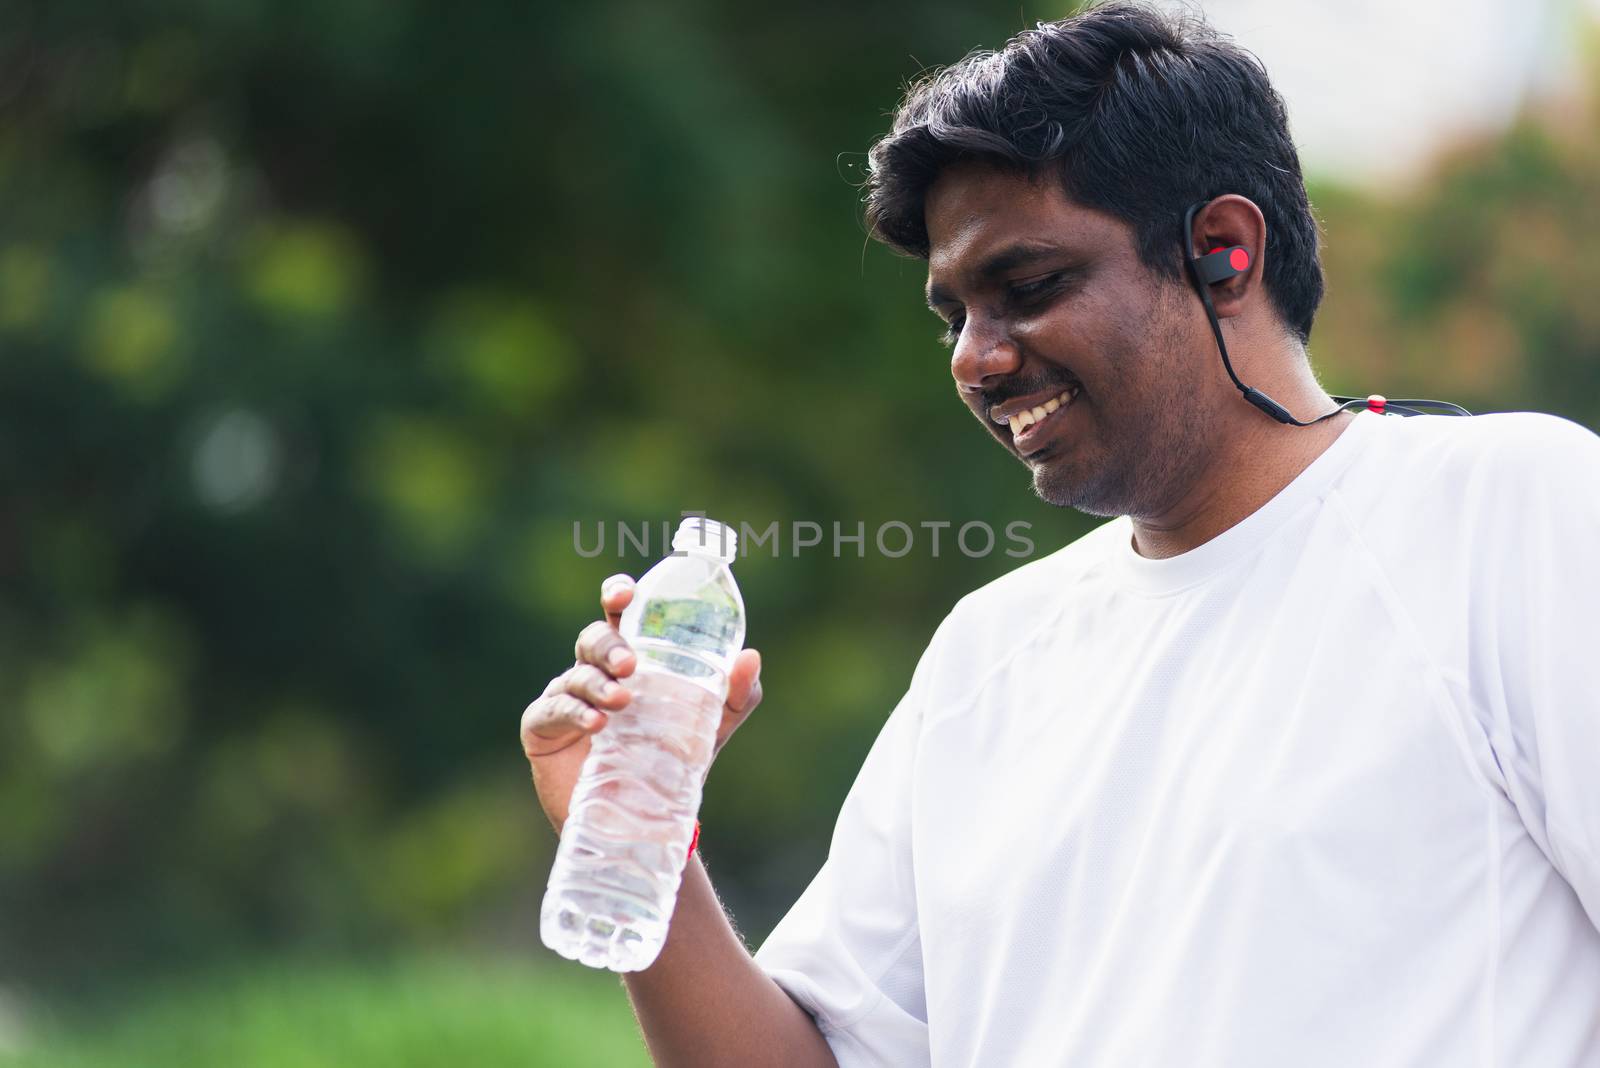 sport runner black man wear athlete headphones he drinking water by Sorapop